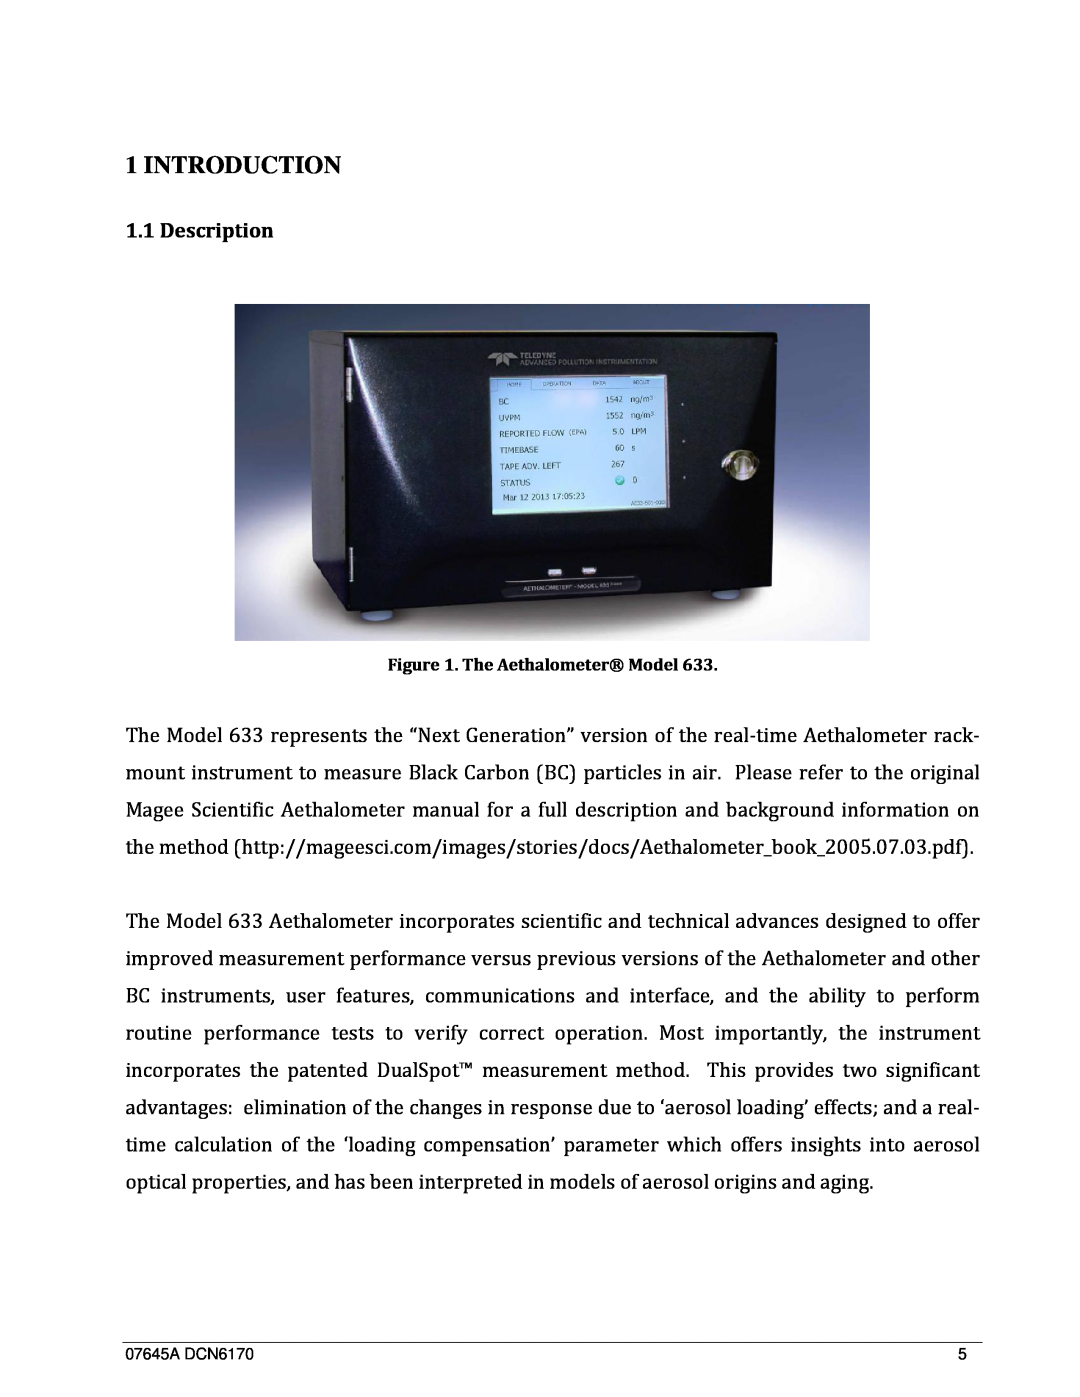 Teledyne 633 user manual Introduction, Description 